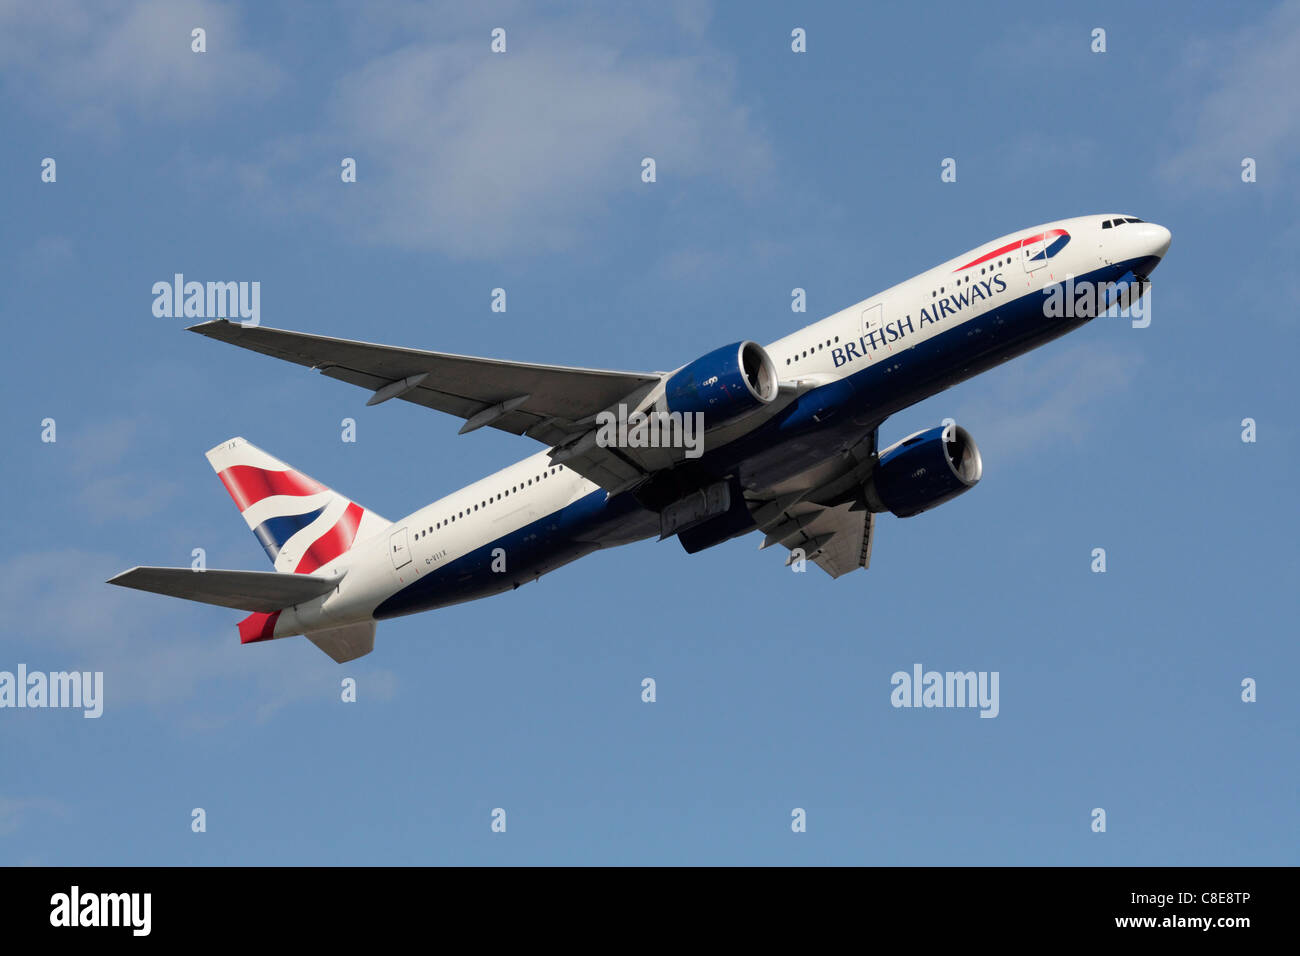 British Airways Boeing 777-200ER widebody passenger jet climbing on departure against a blue sky Stock Photo